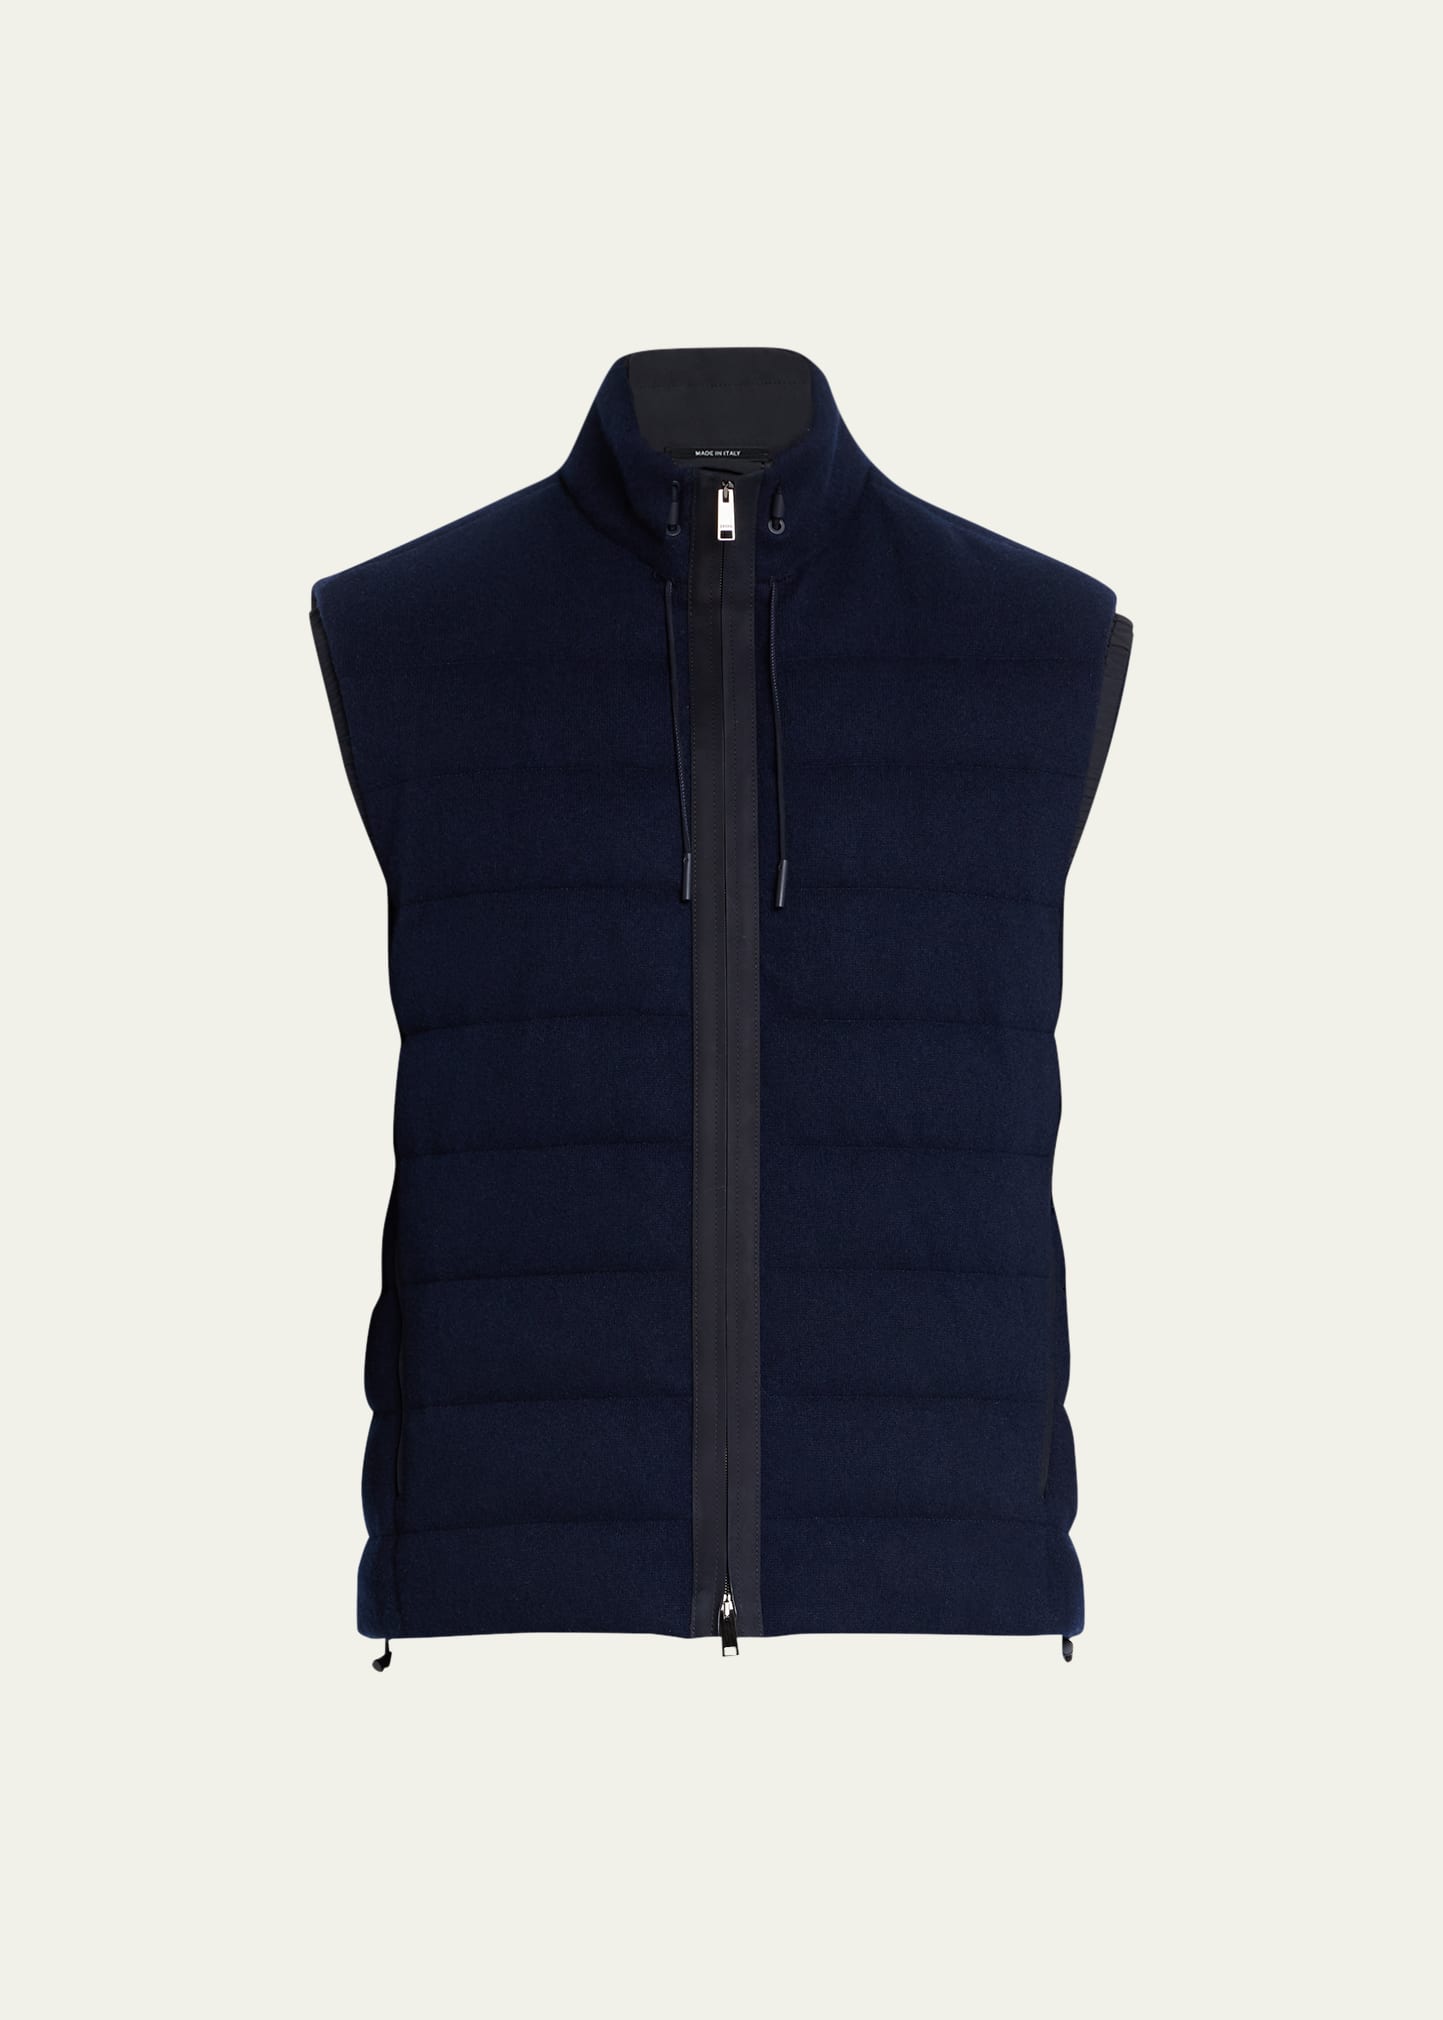 Men's Quilted Cashmere Full-Zip Vest